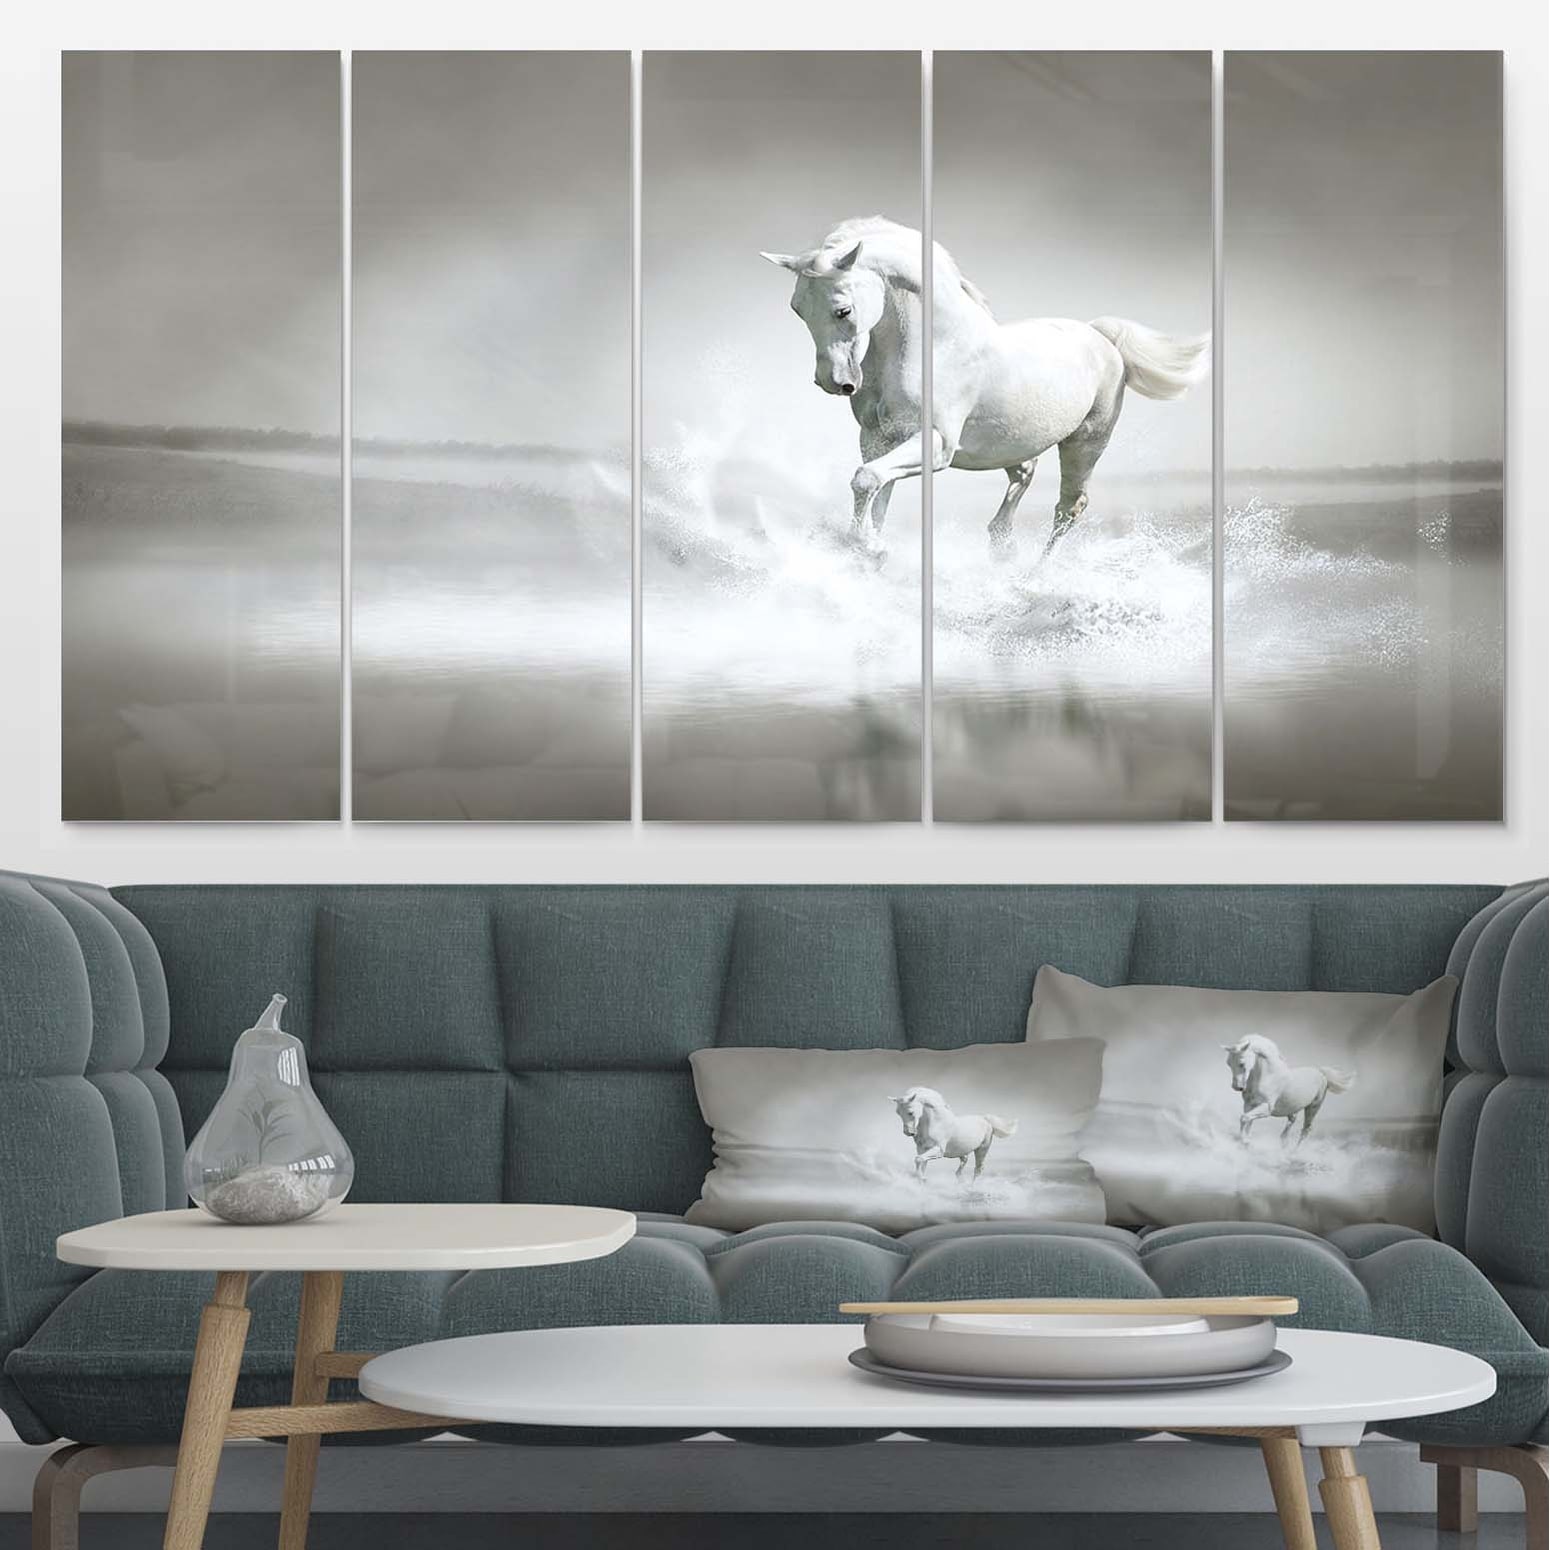 Designart 'White Horse Running in Water' Extra Large Animal Metal Wall Art